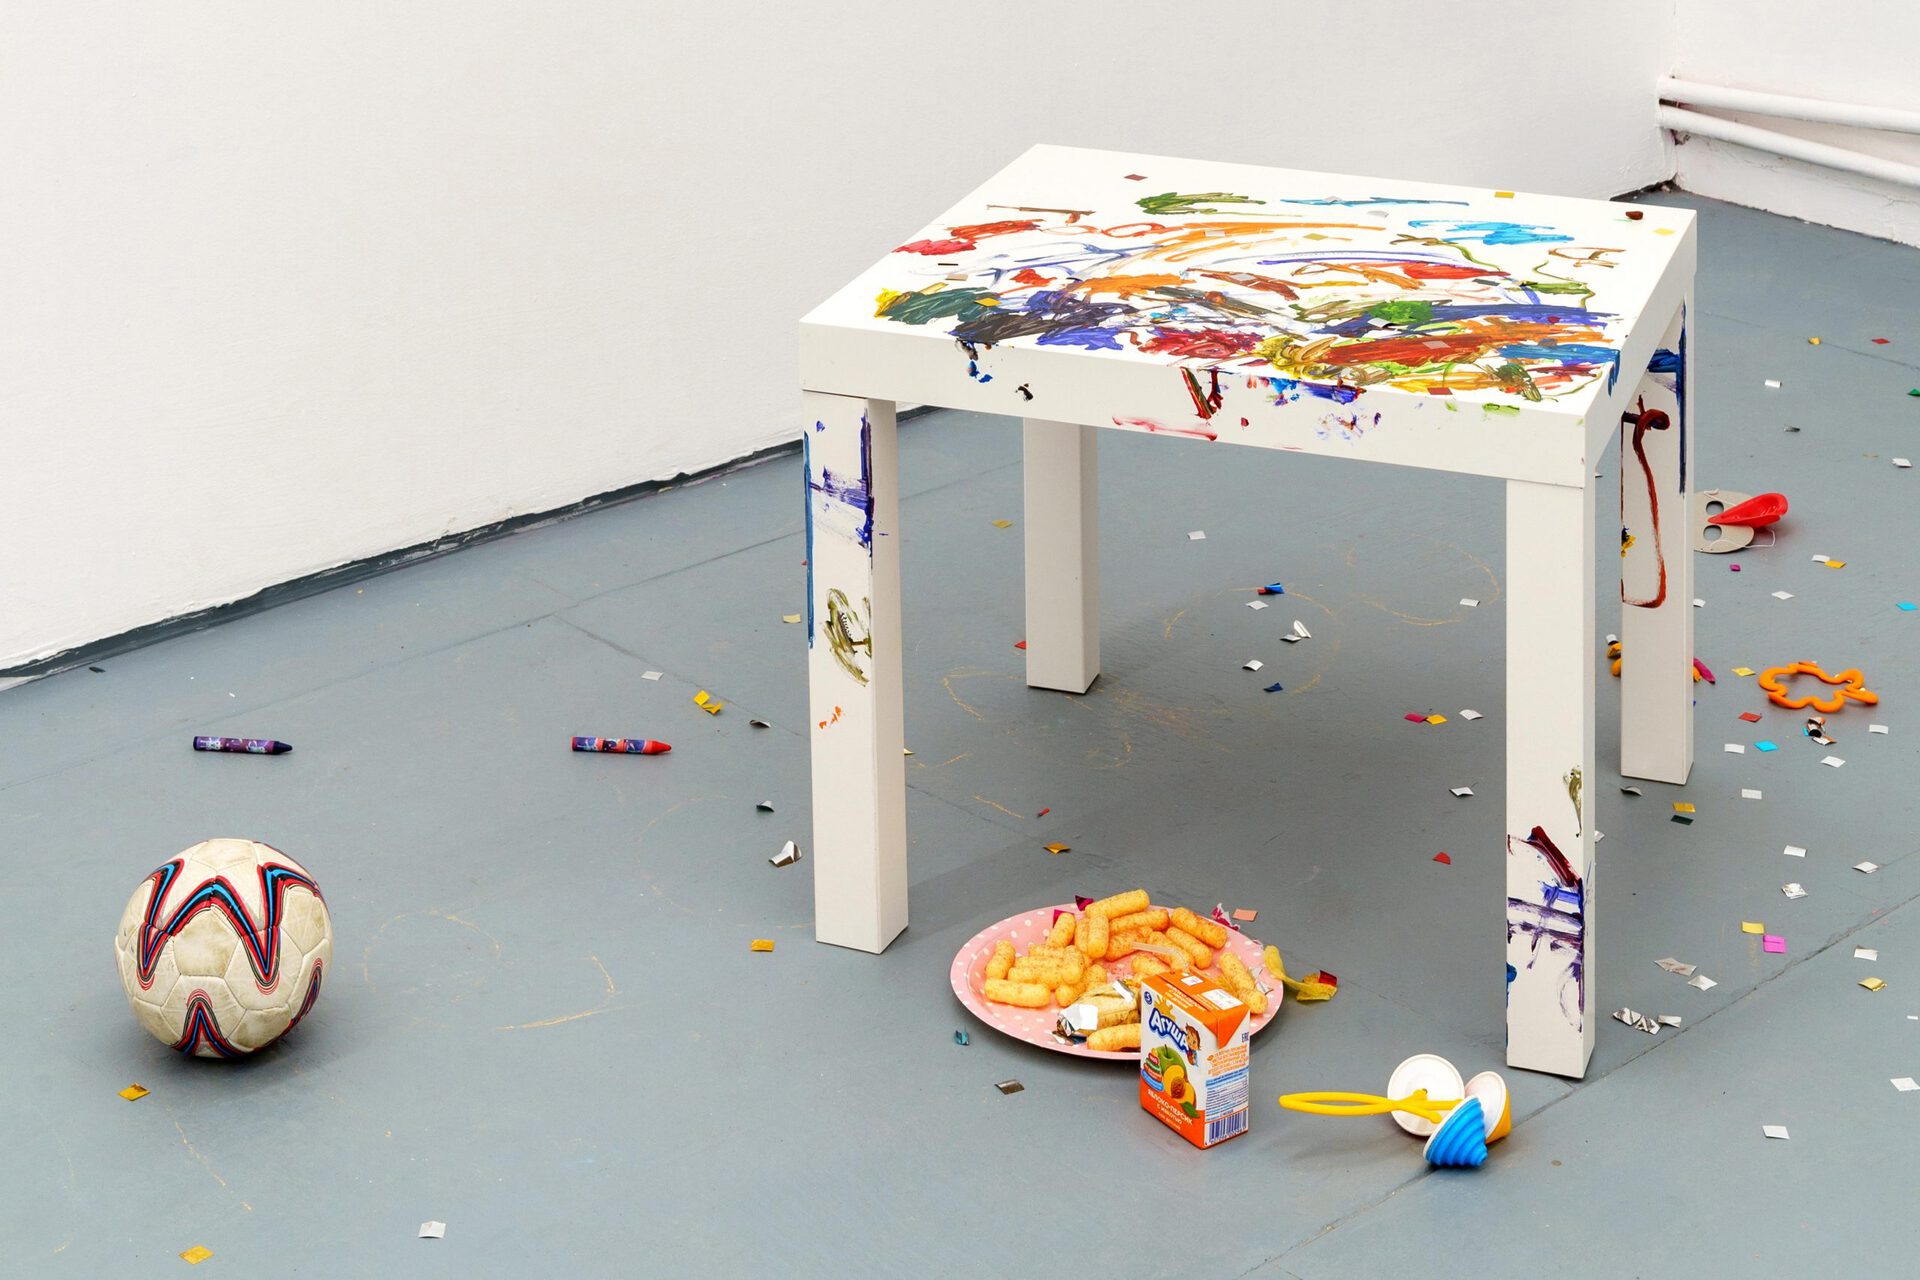 Daniil Golyakov (2 y.o) &amp; Arthur Golyakov, ’Paints’, 2021, acrylic, Ikea "Lack" table, 55x55x45 cm